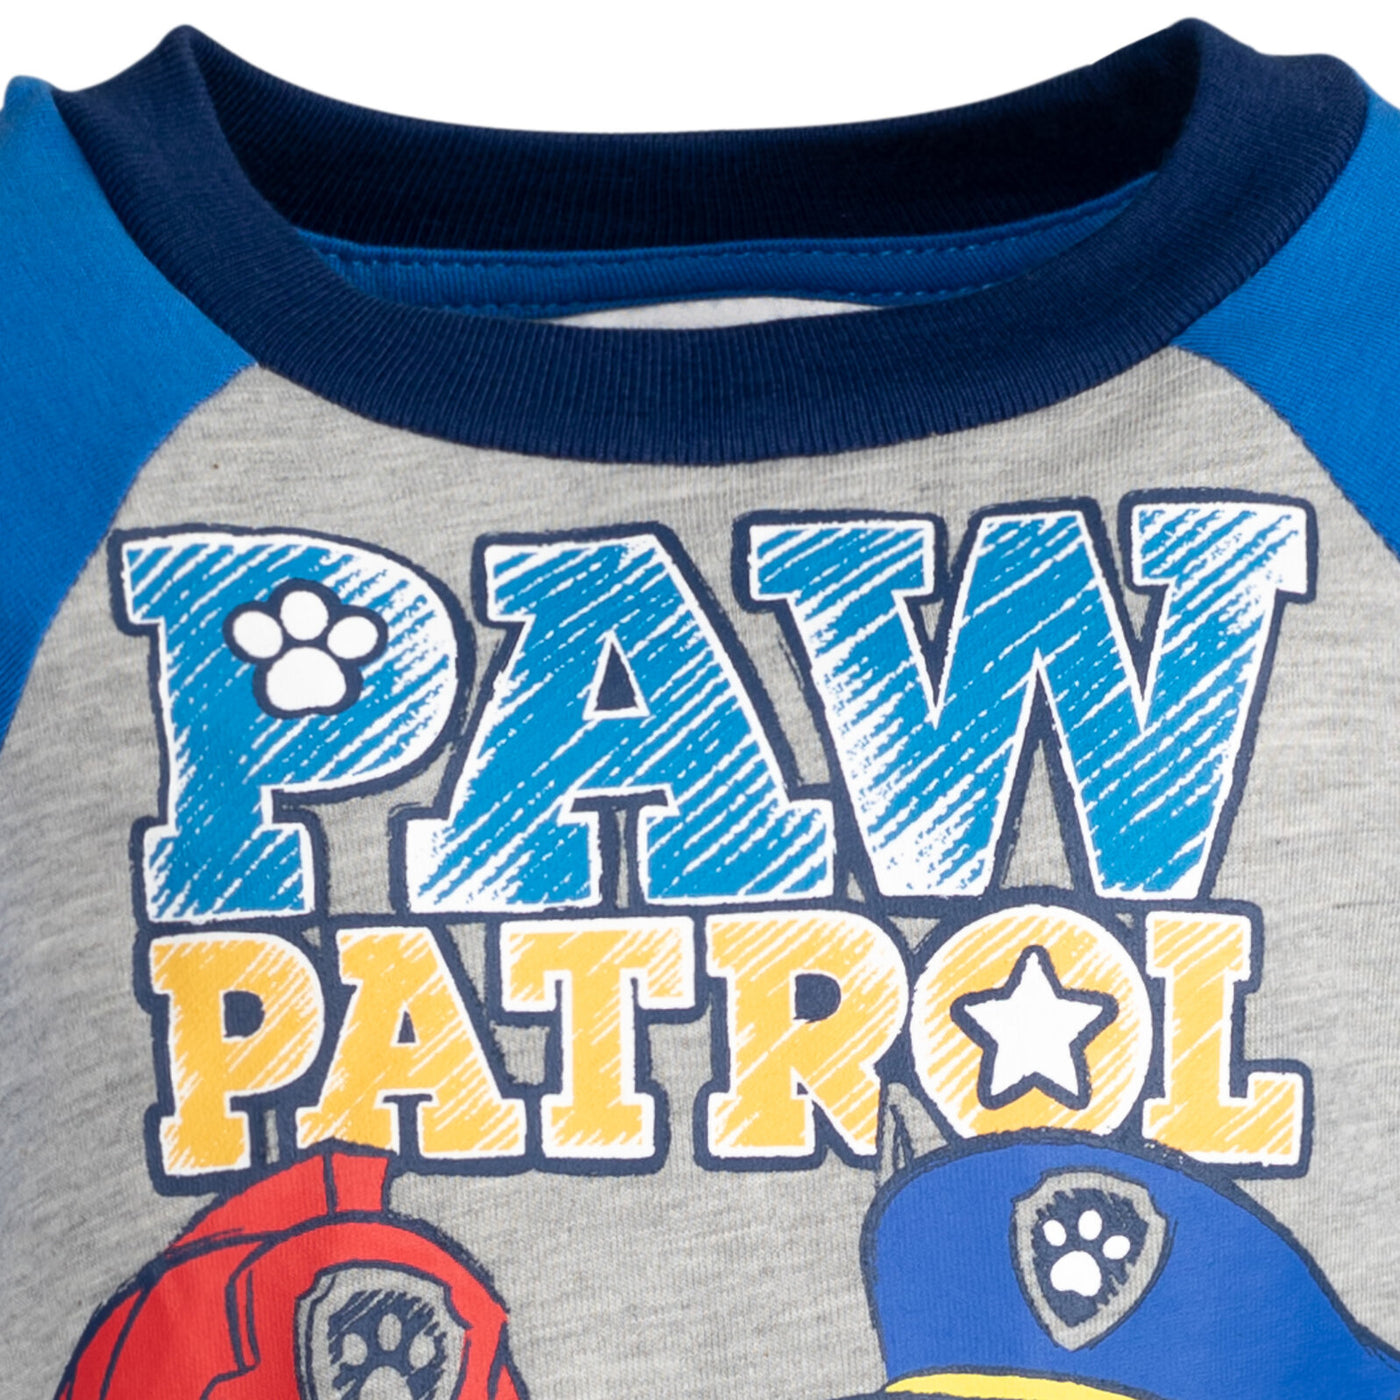 Paw Patrol Marshall 2 Pack Long Sleeve Graphic T-Shirt